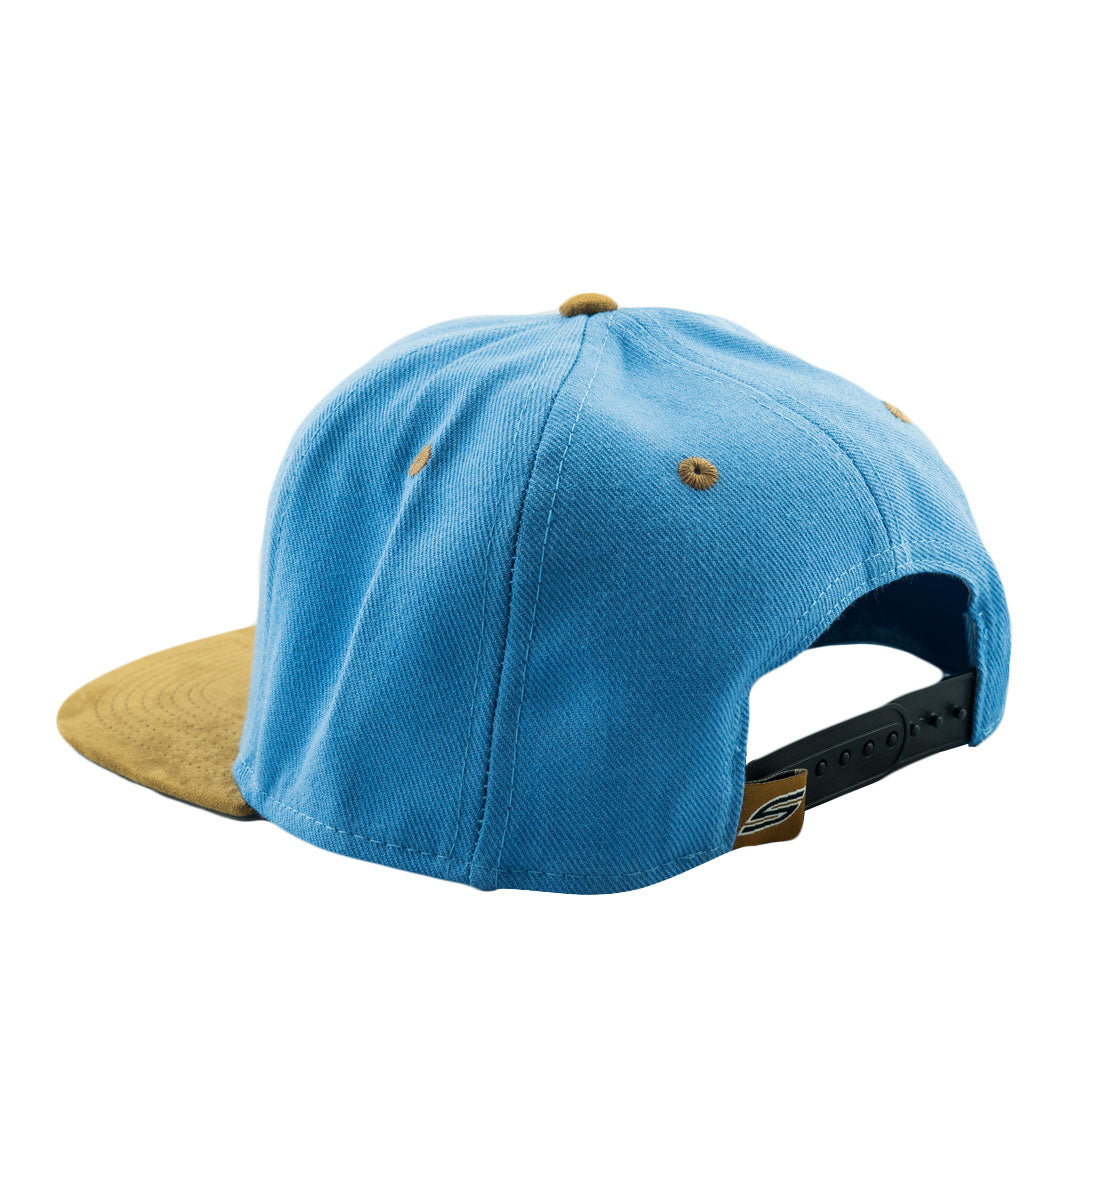 Snapback Hat, Baby Blue, Tobacco Suede Bill | Social Paintball | Headwear Hats